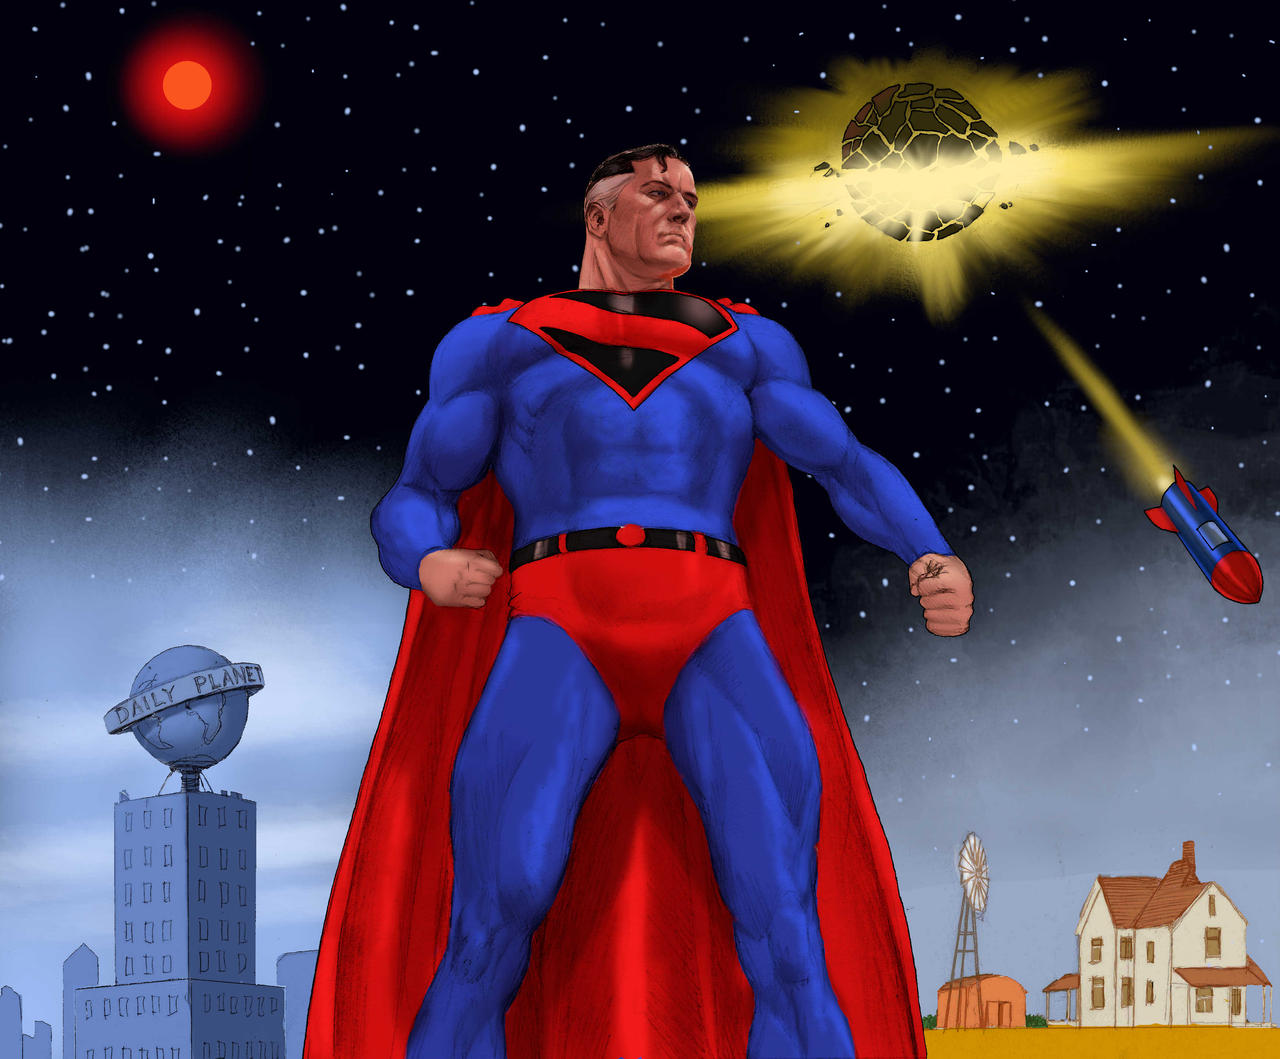 Superman by Nick-Perks on DeviantArt